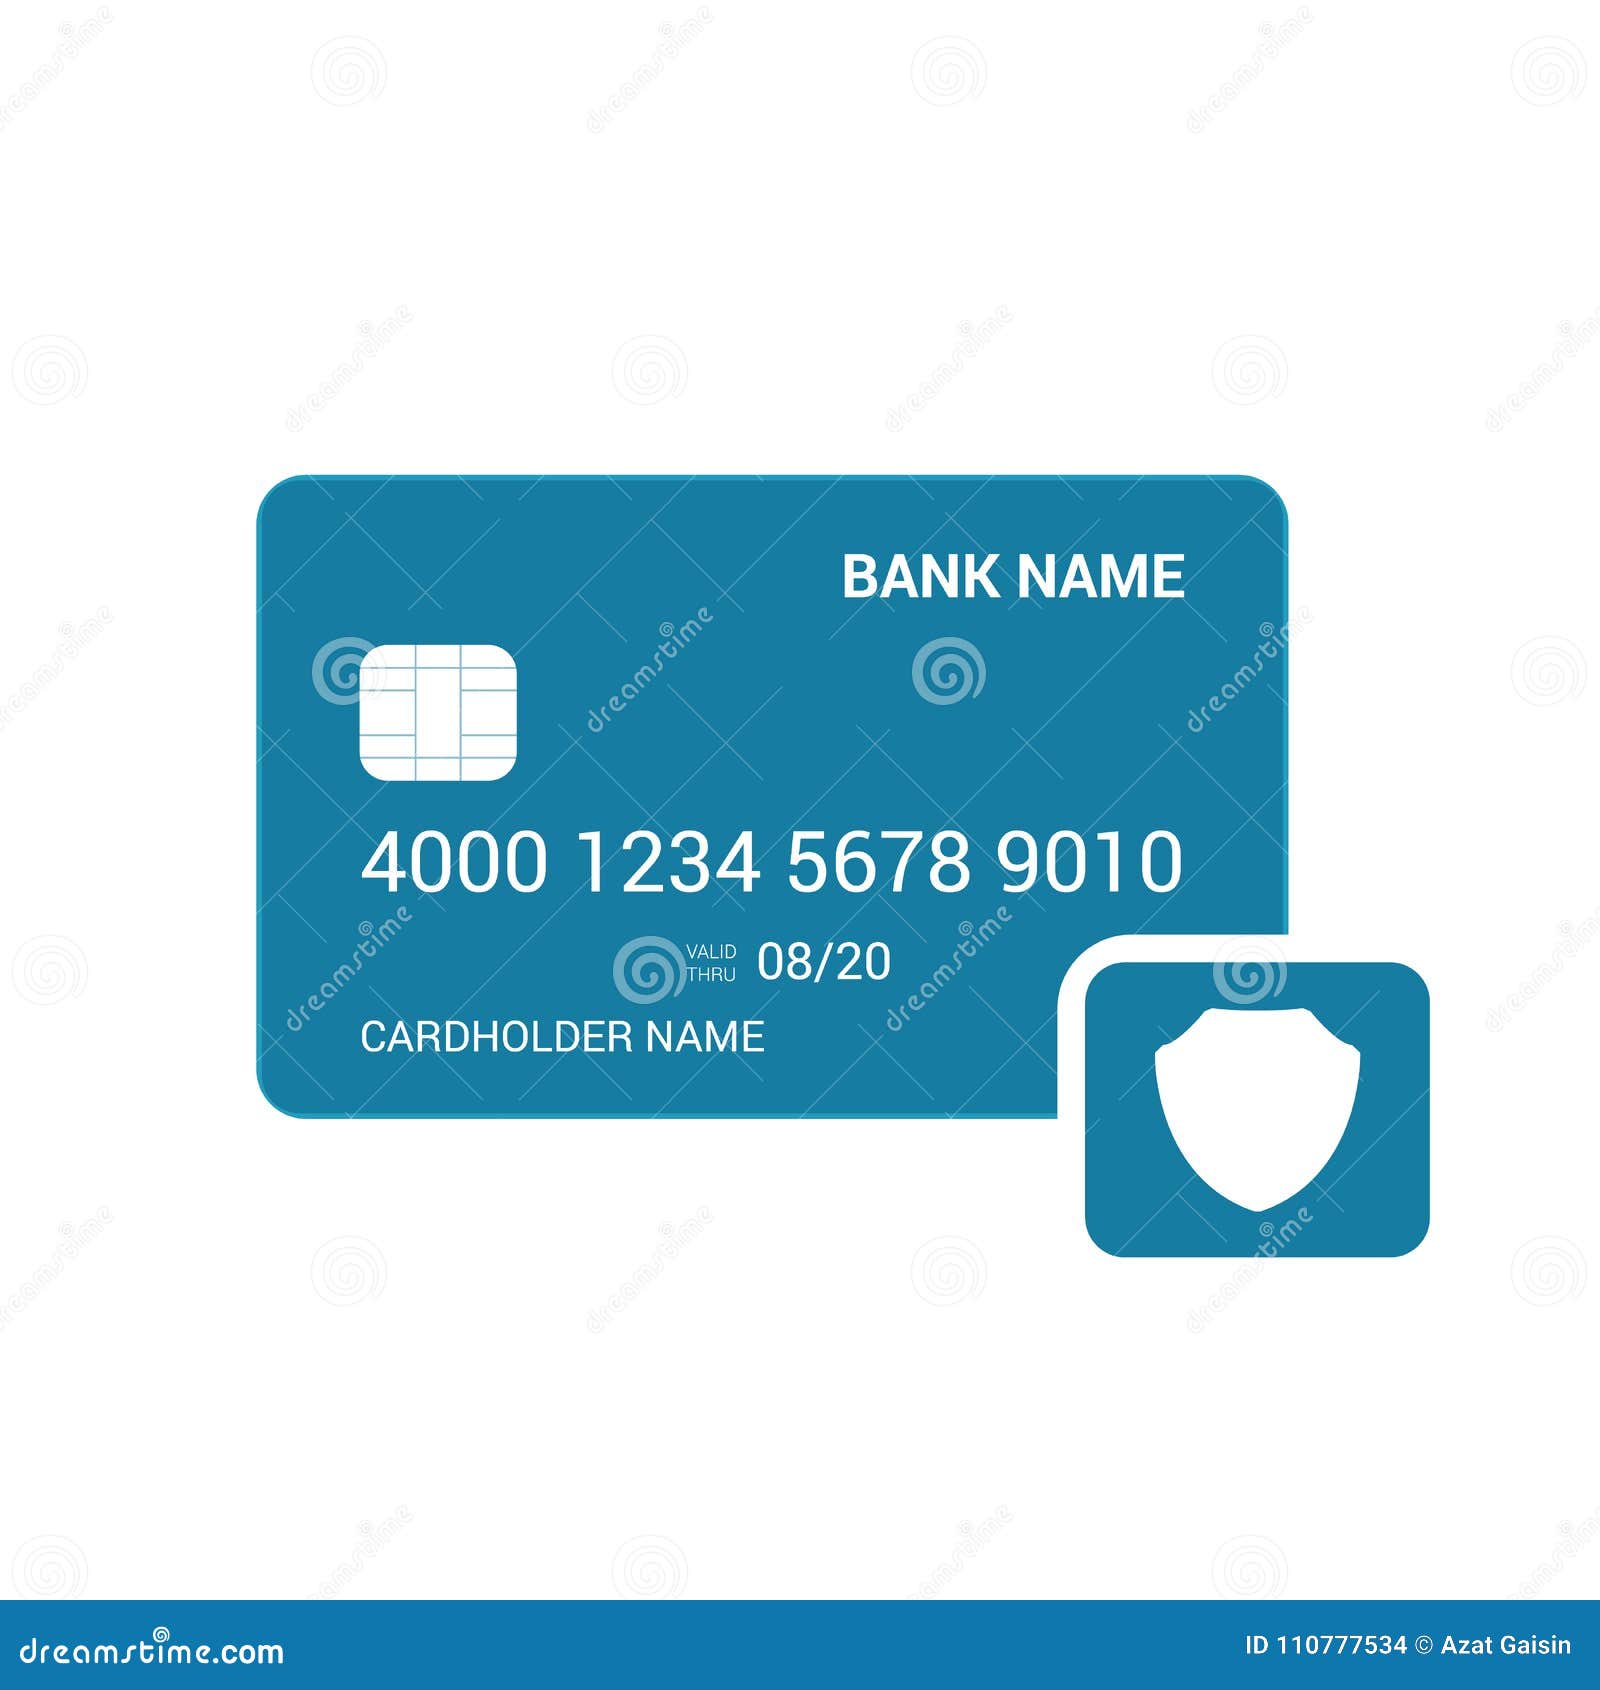 Cards Debit Cards Credit Card Commercial Bank Sri Lanka